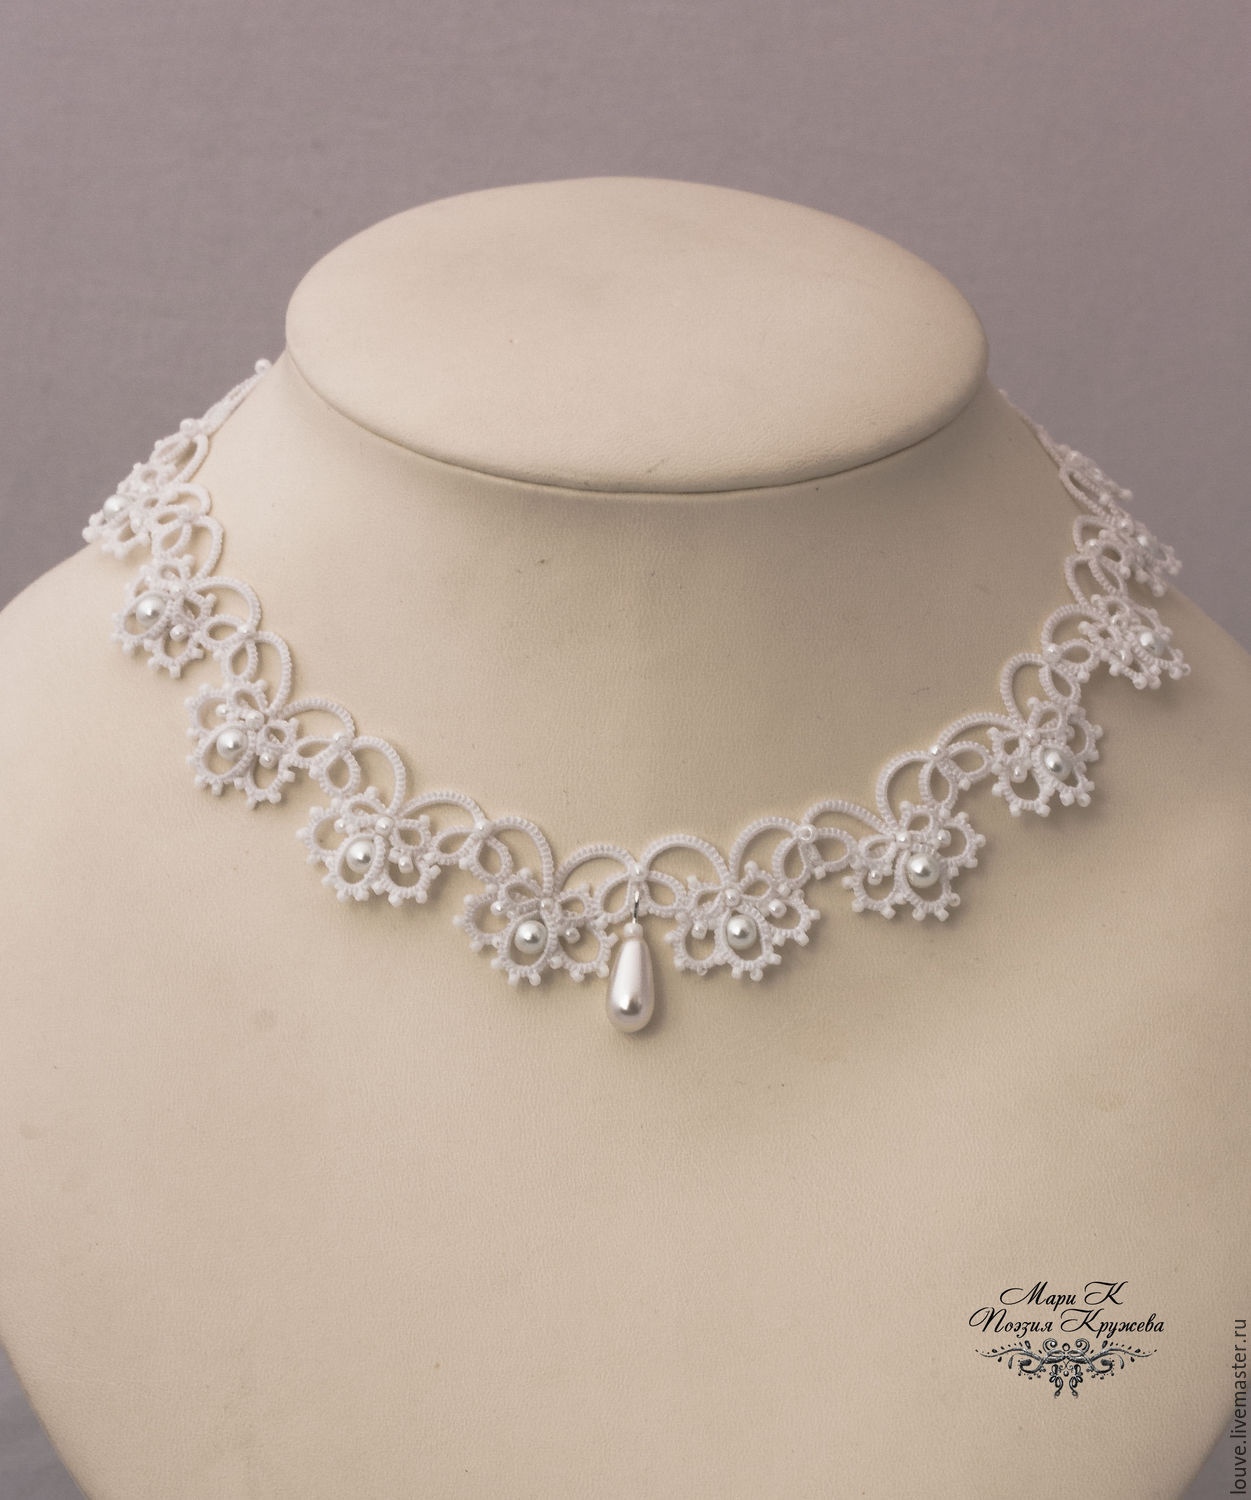 White lace choker necklace